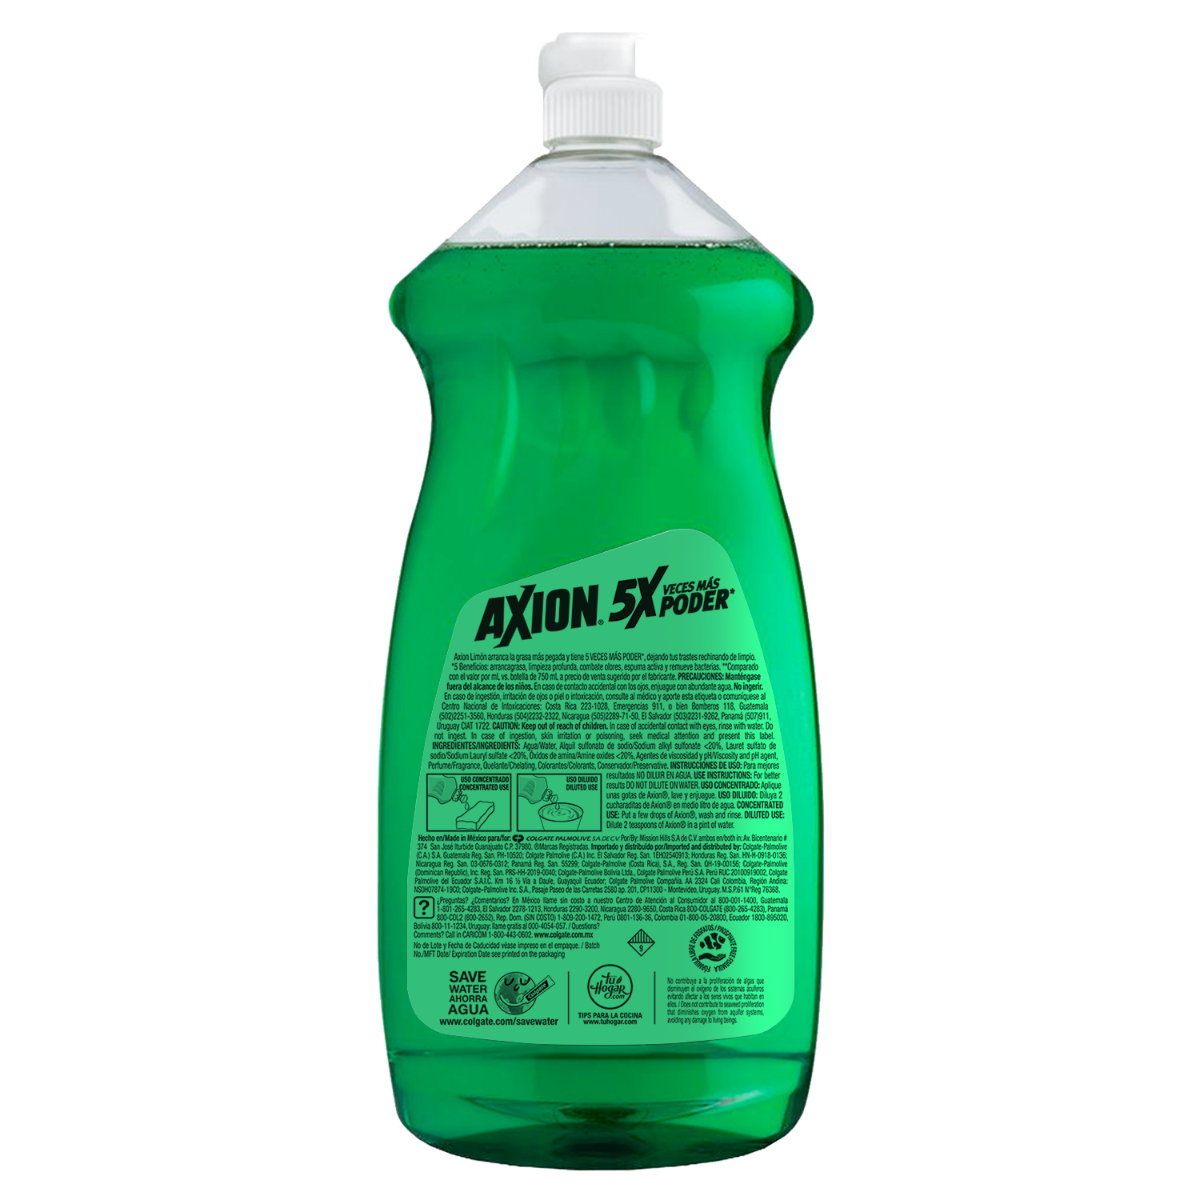 Detergente Lavatrastes Líquido Axion Limón 1.1 l